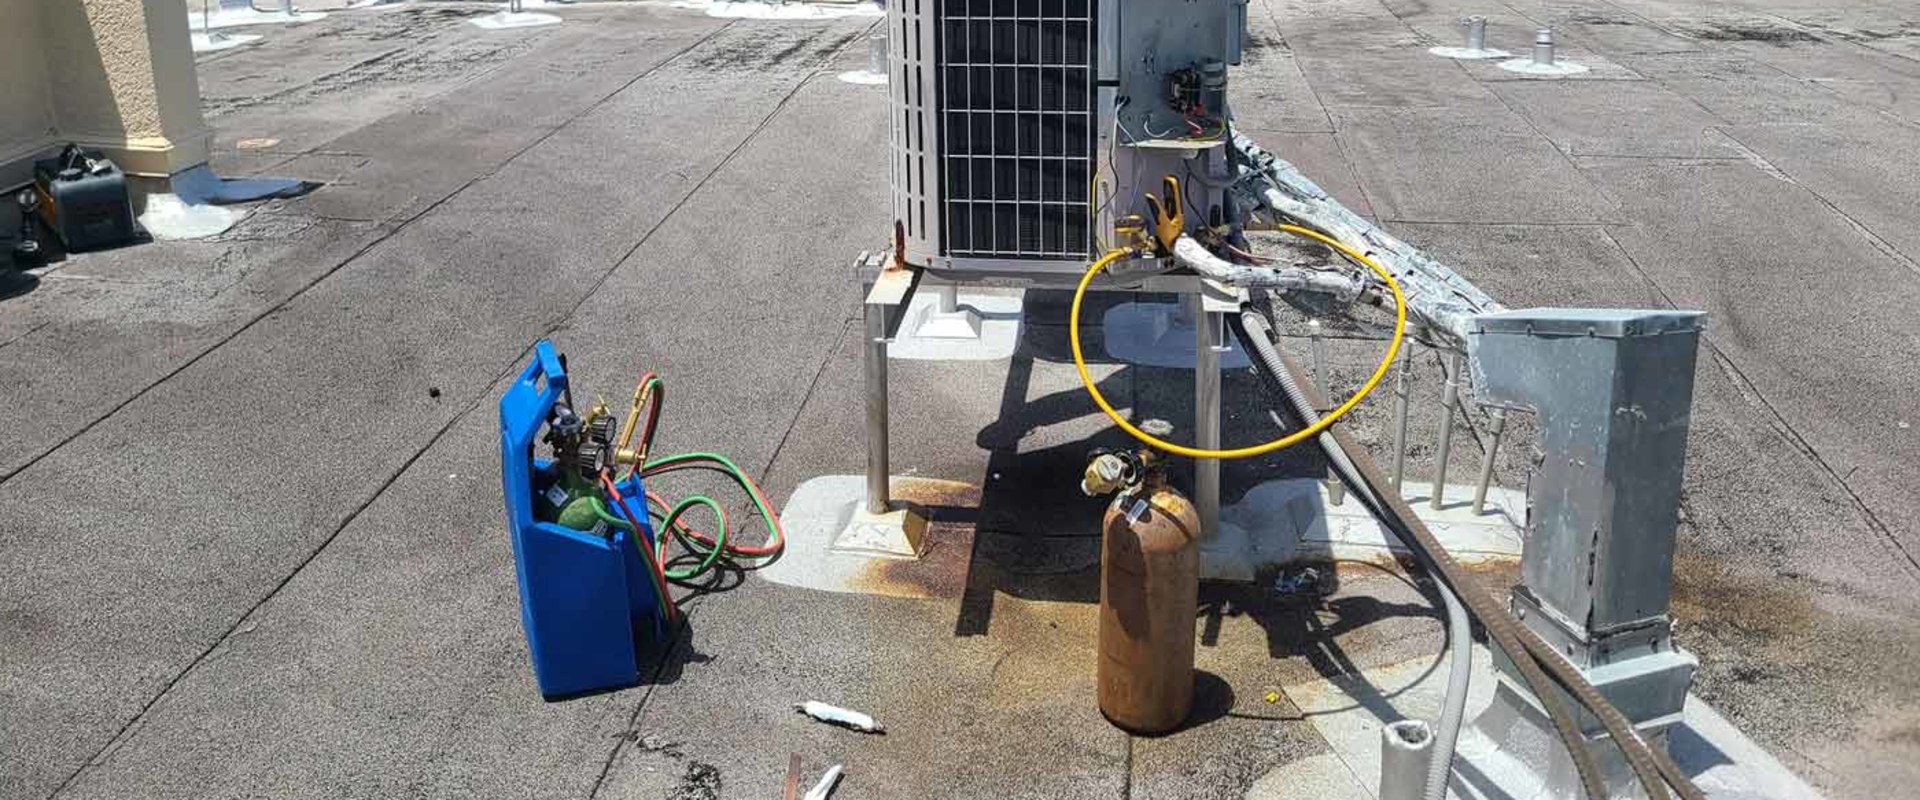 Trustworthy HVAC Air Conditioning Repair Services In Hobe Sound FL